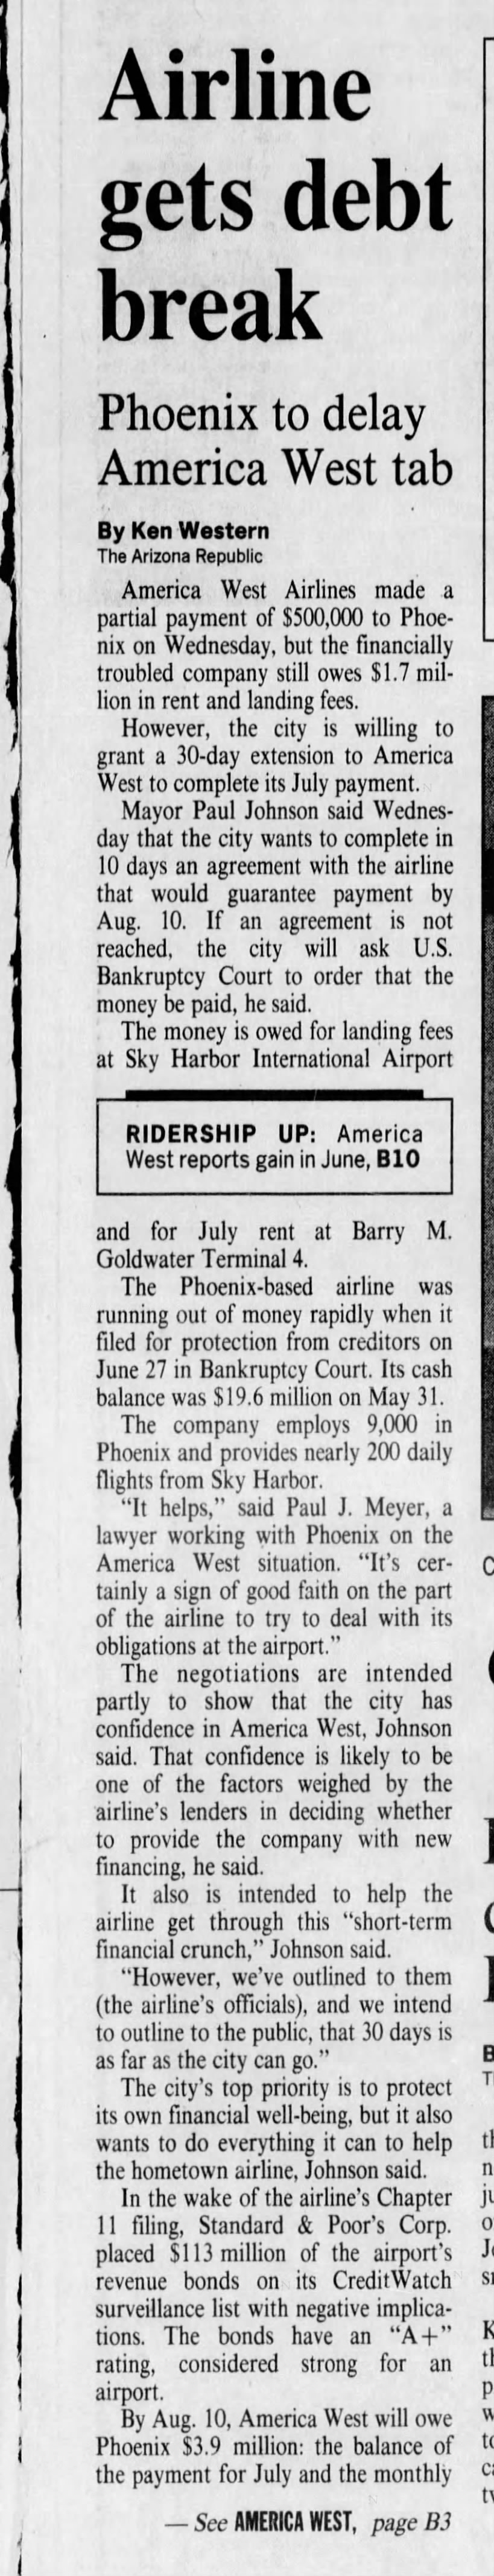 "Airline gets debt break" (Jul 11, 1991)